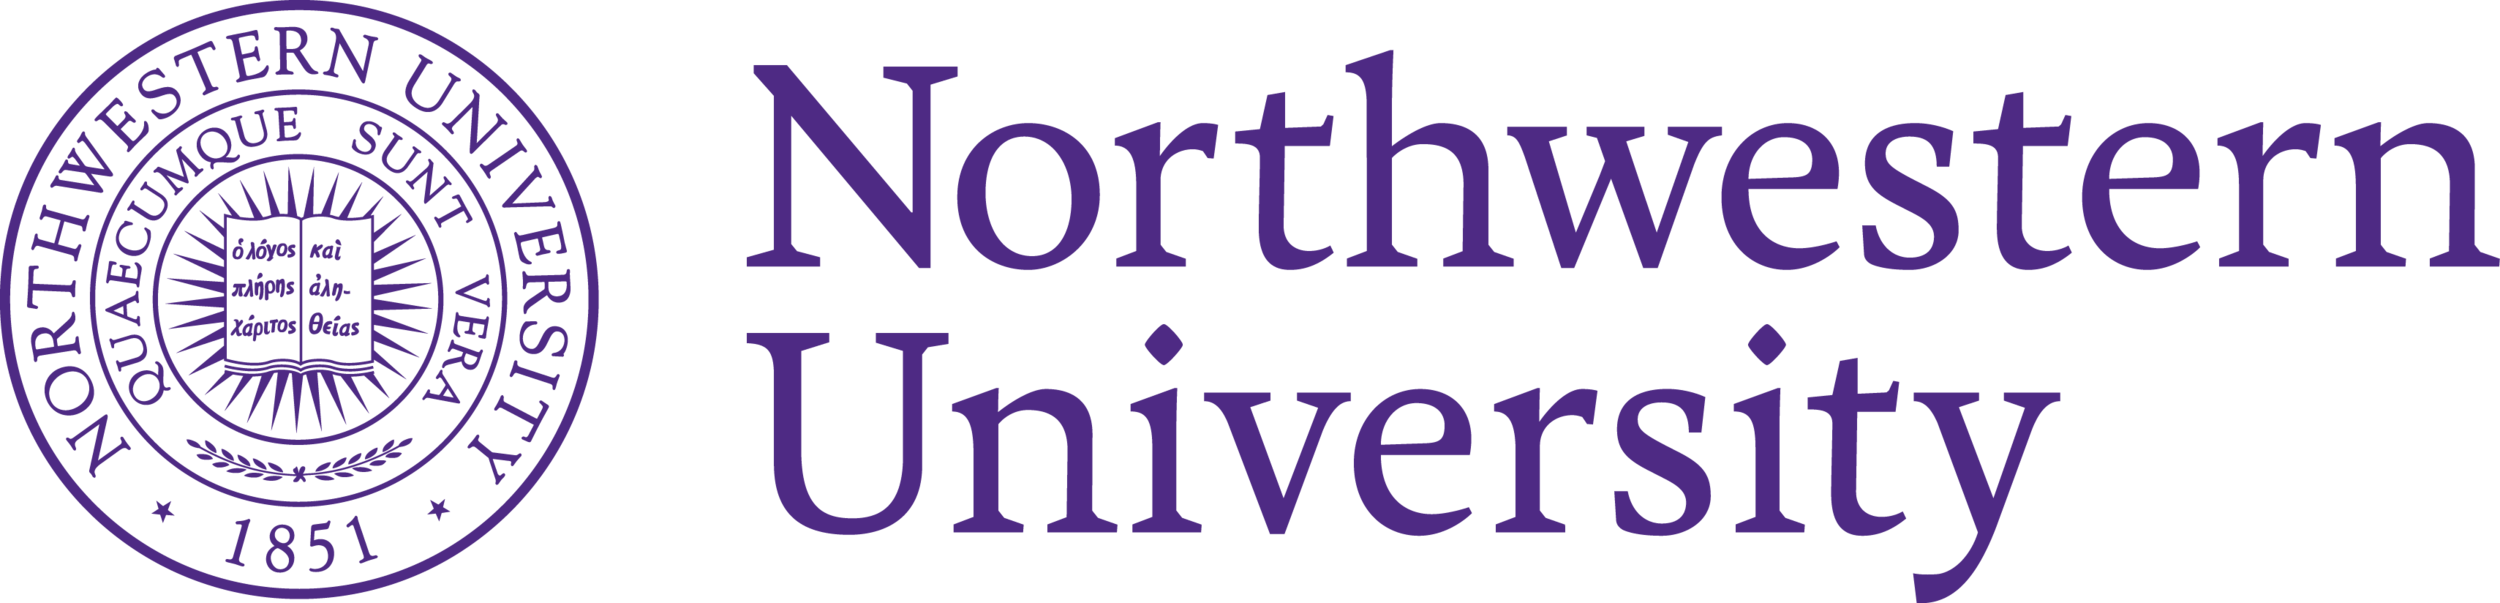 Northwestern_University_Lakhani_Coaching_Acceptance_List.png